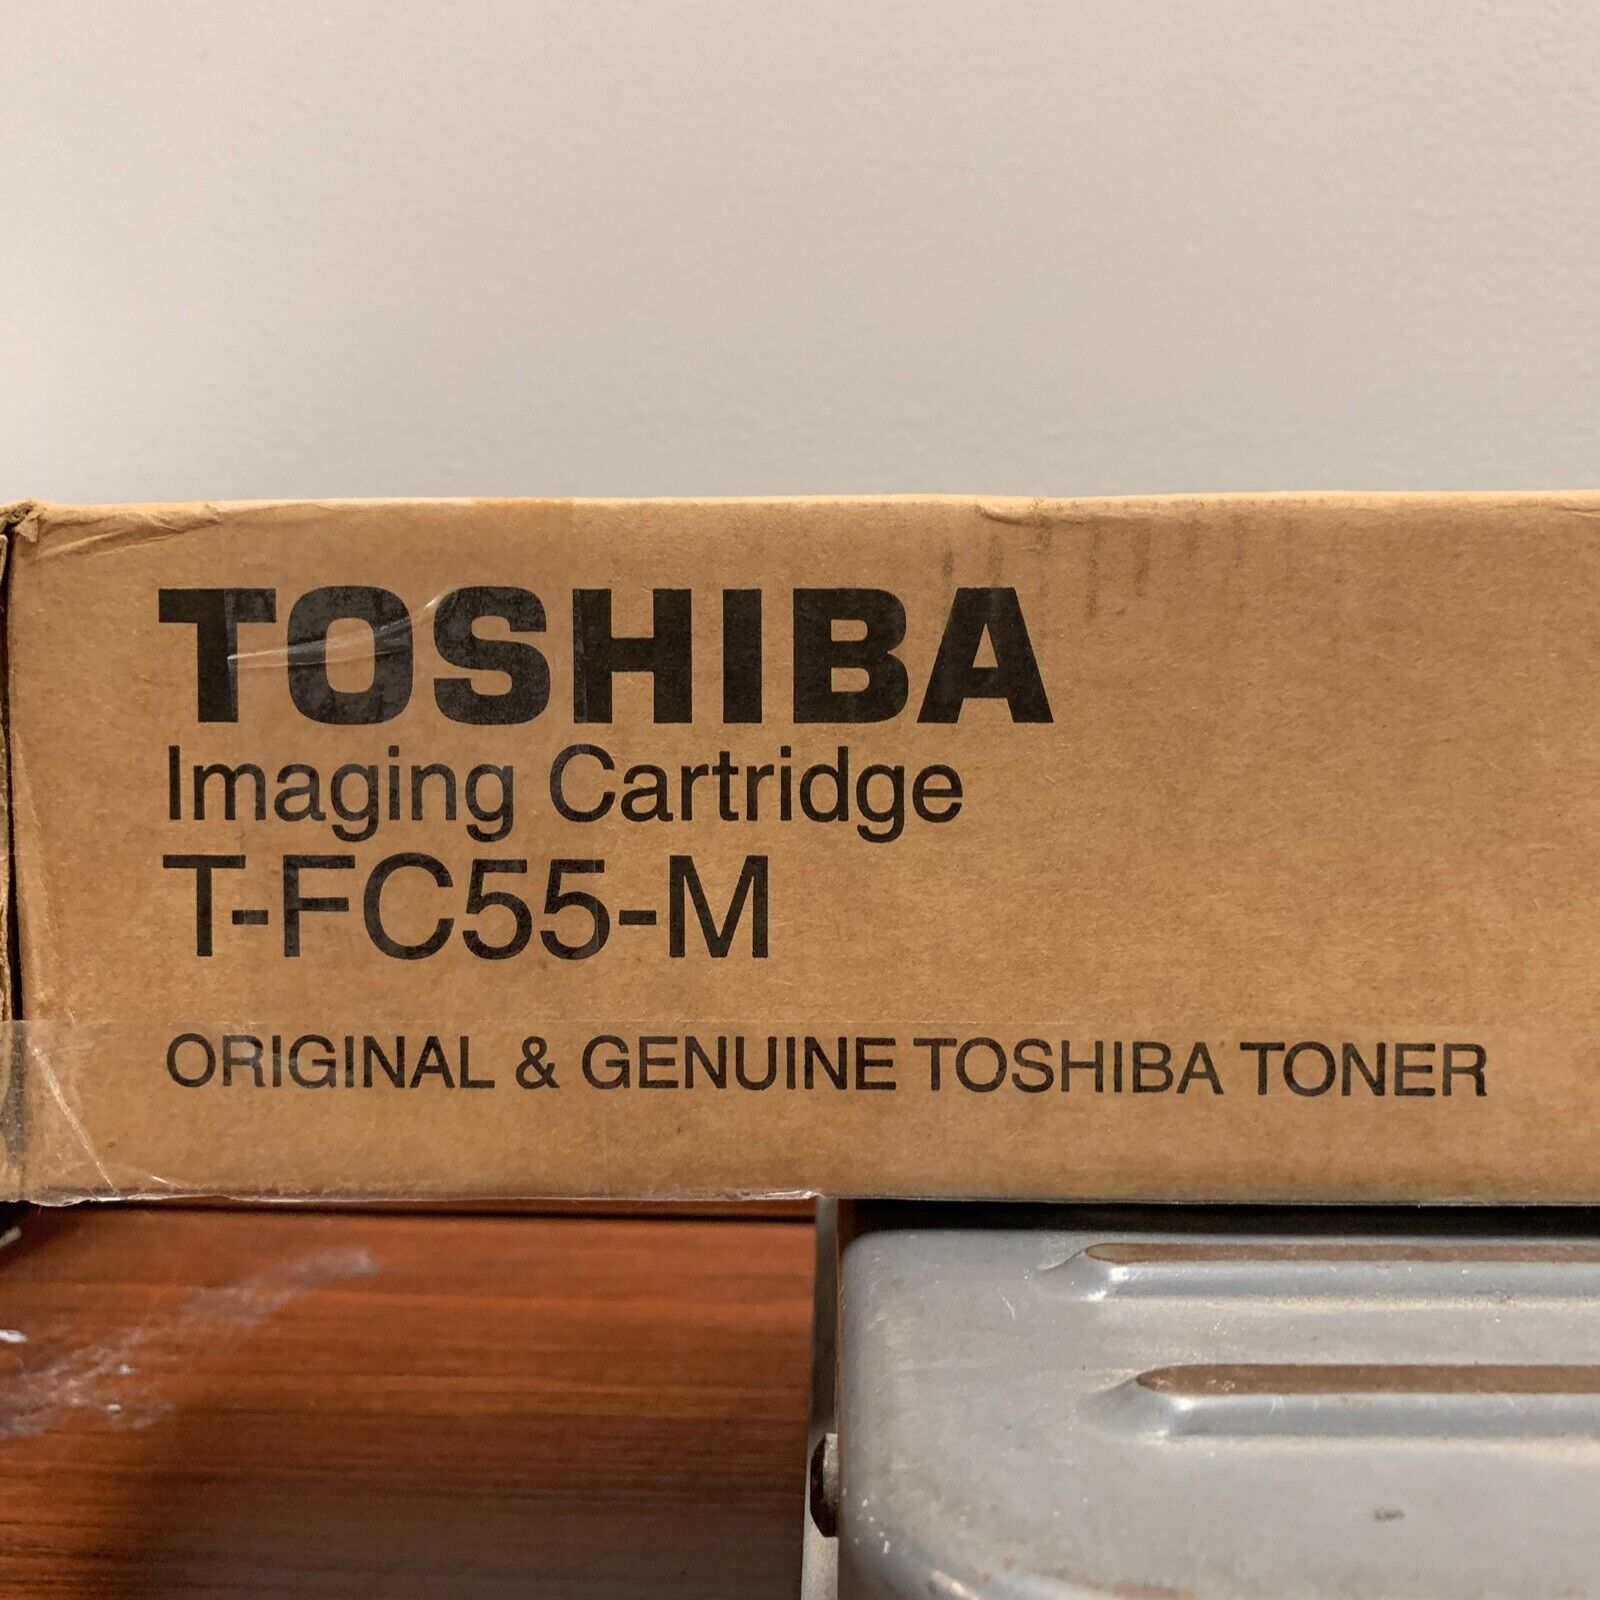 Toshiba T-FC55-M